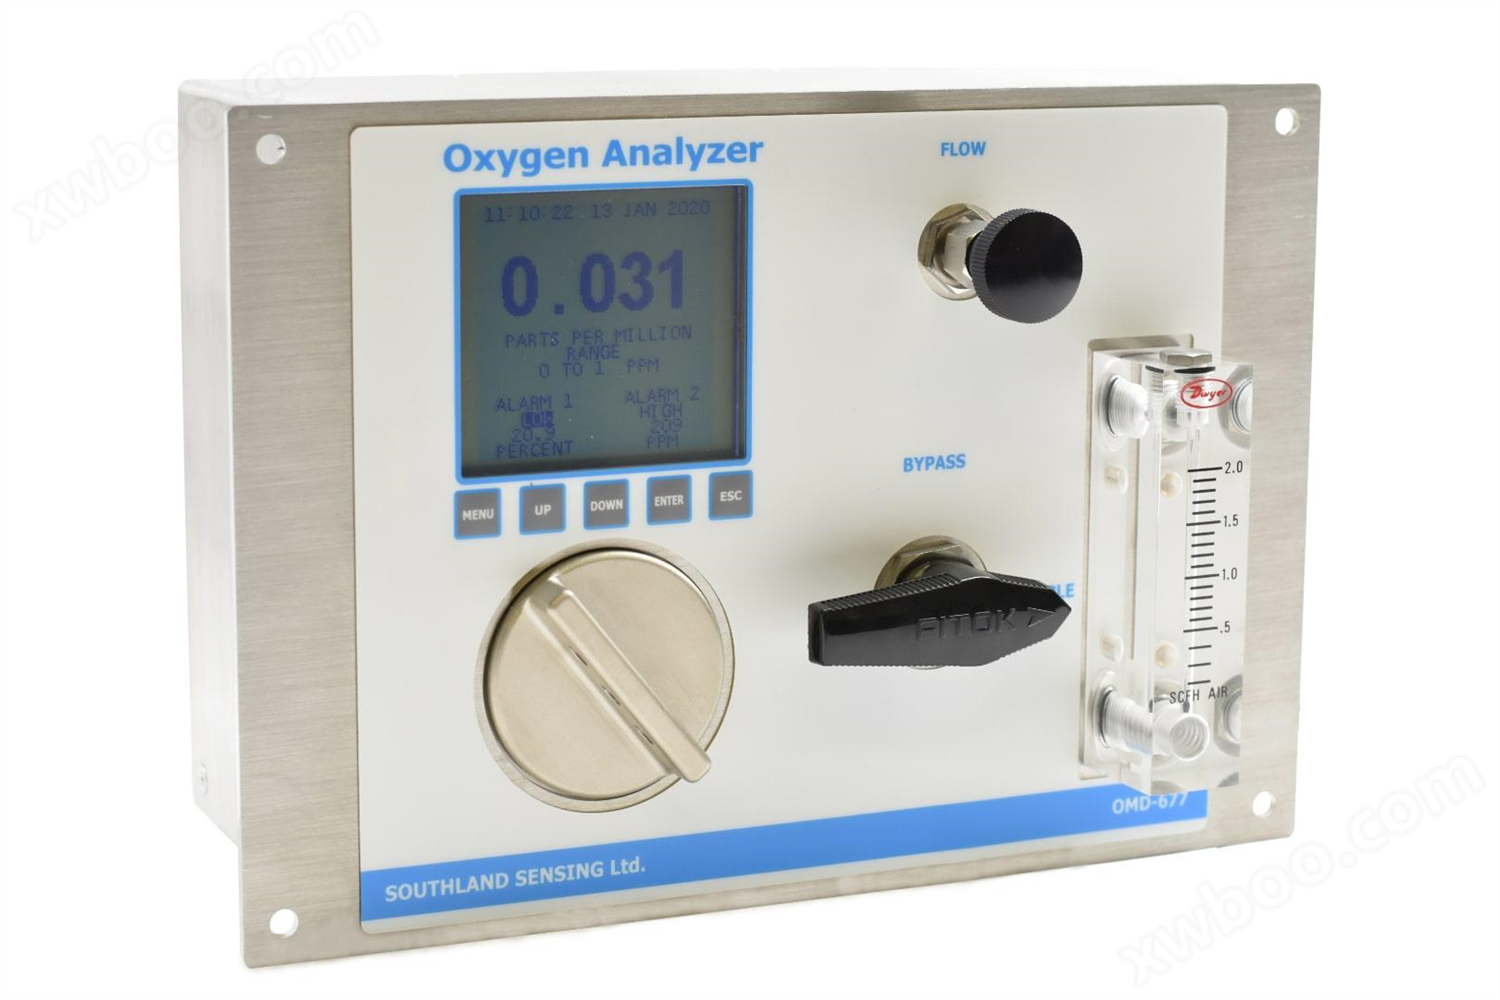 OMD-677-10 在线微量氧气分析仪参数：  不锈钢外壳、防水、防尘、防酸按键  精 度：<1%  量程范围： 0-1ppm, 0 - 10ppm, 0 - 100ppm, 0 - 1000ppm,  0 - 25%